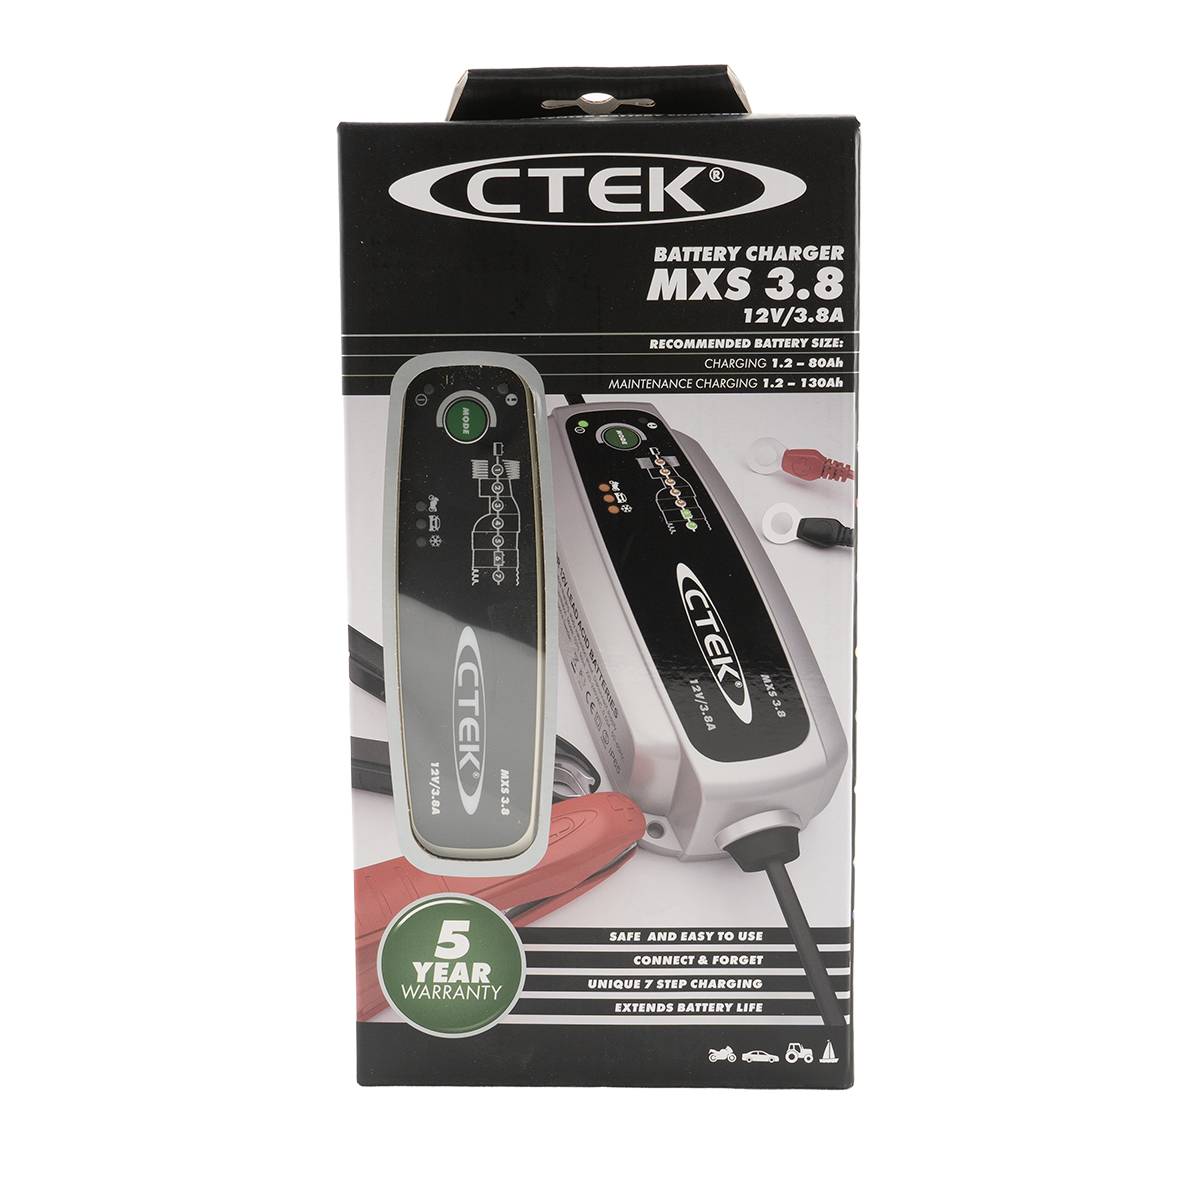 CTEK MXS 3.8 Autobatterie-Ladegerät 12V 3,8A